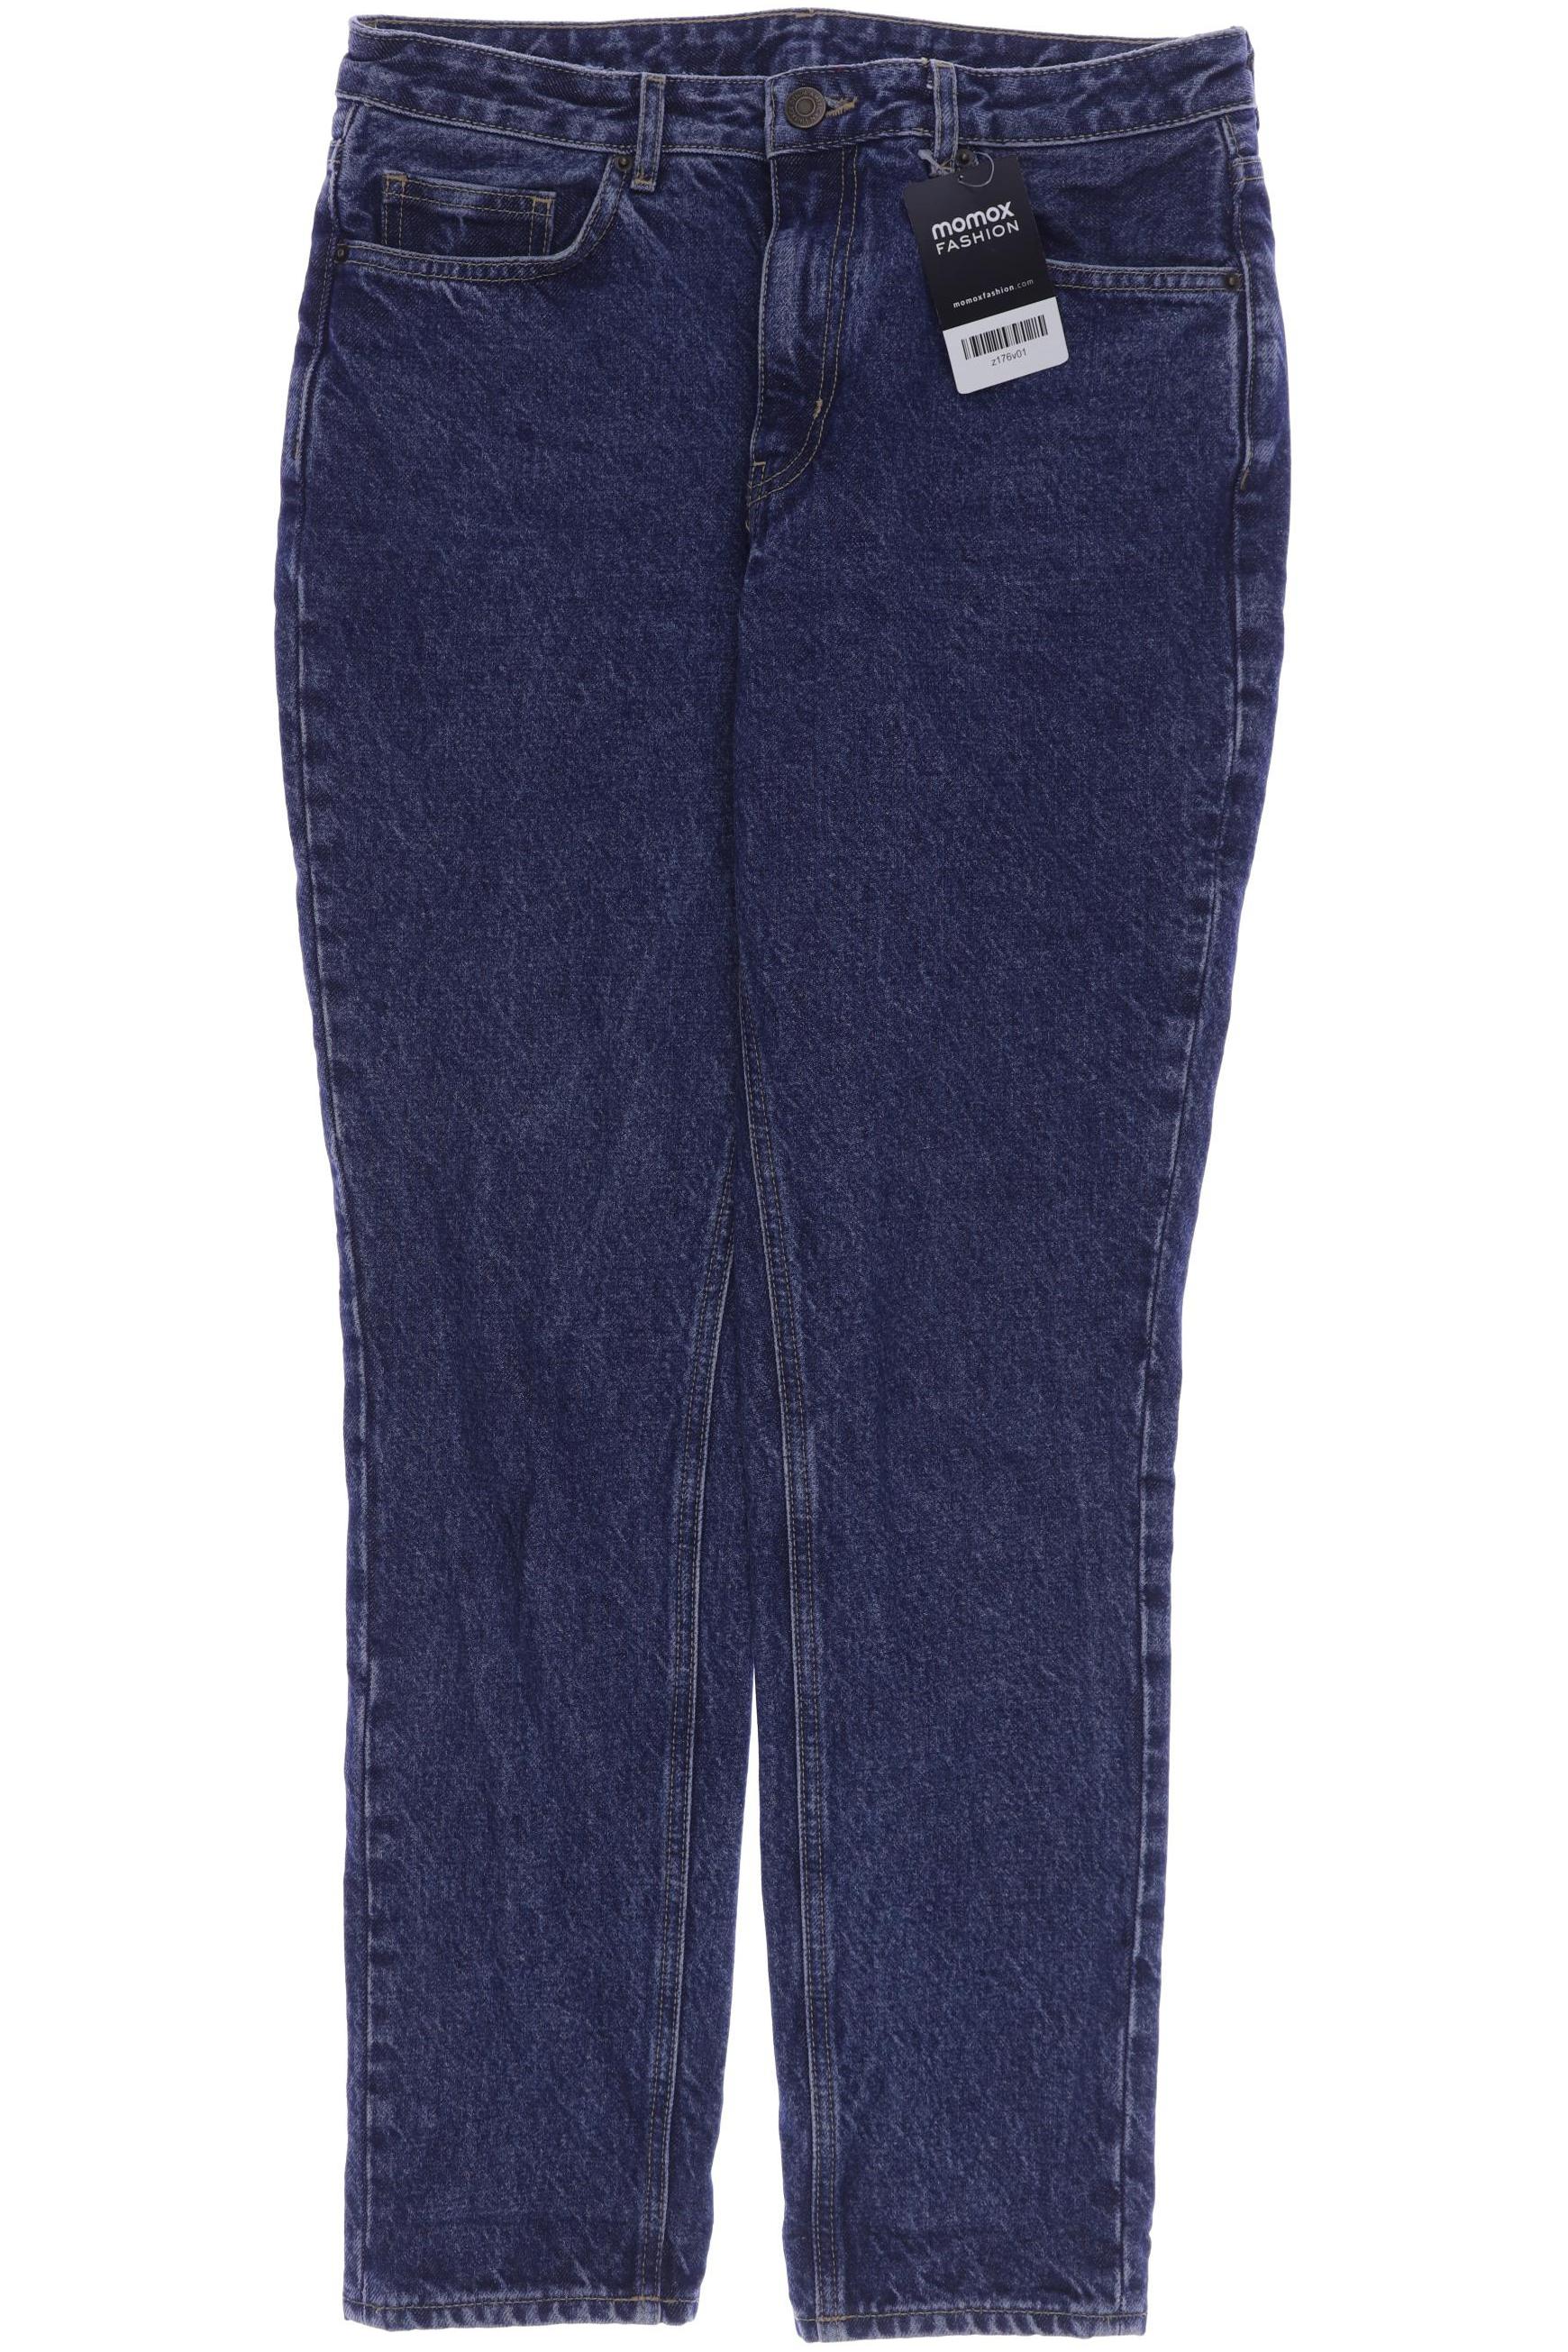 American Vintage Damen Jeans, blau von American vintage